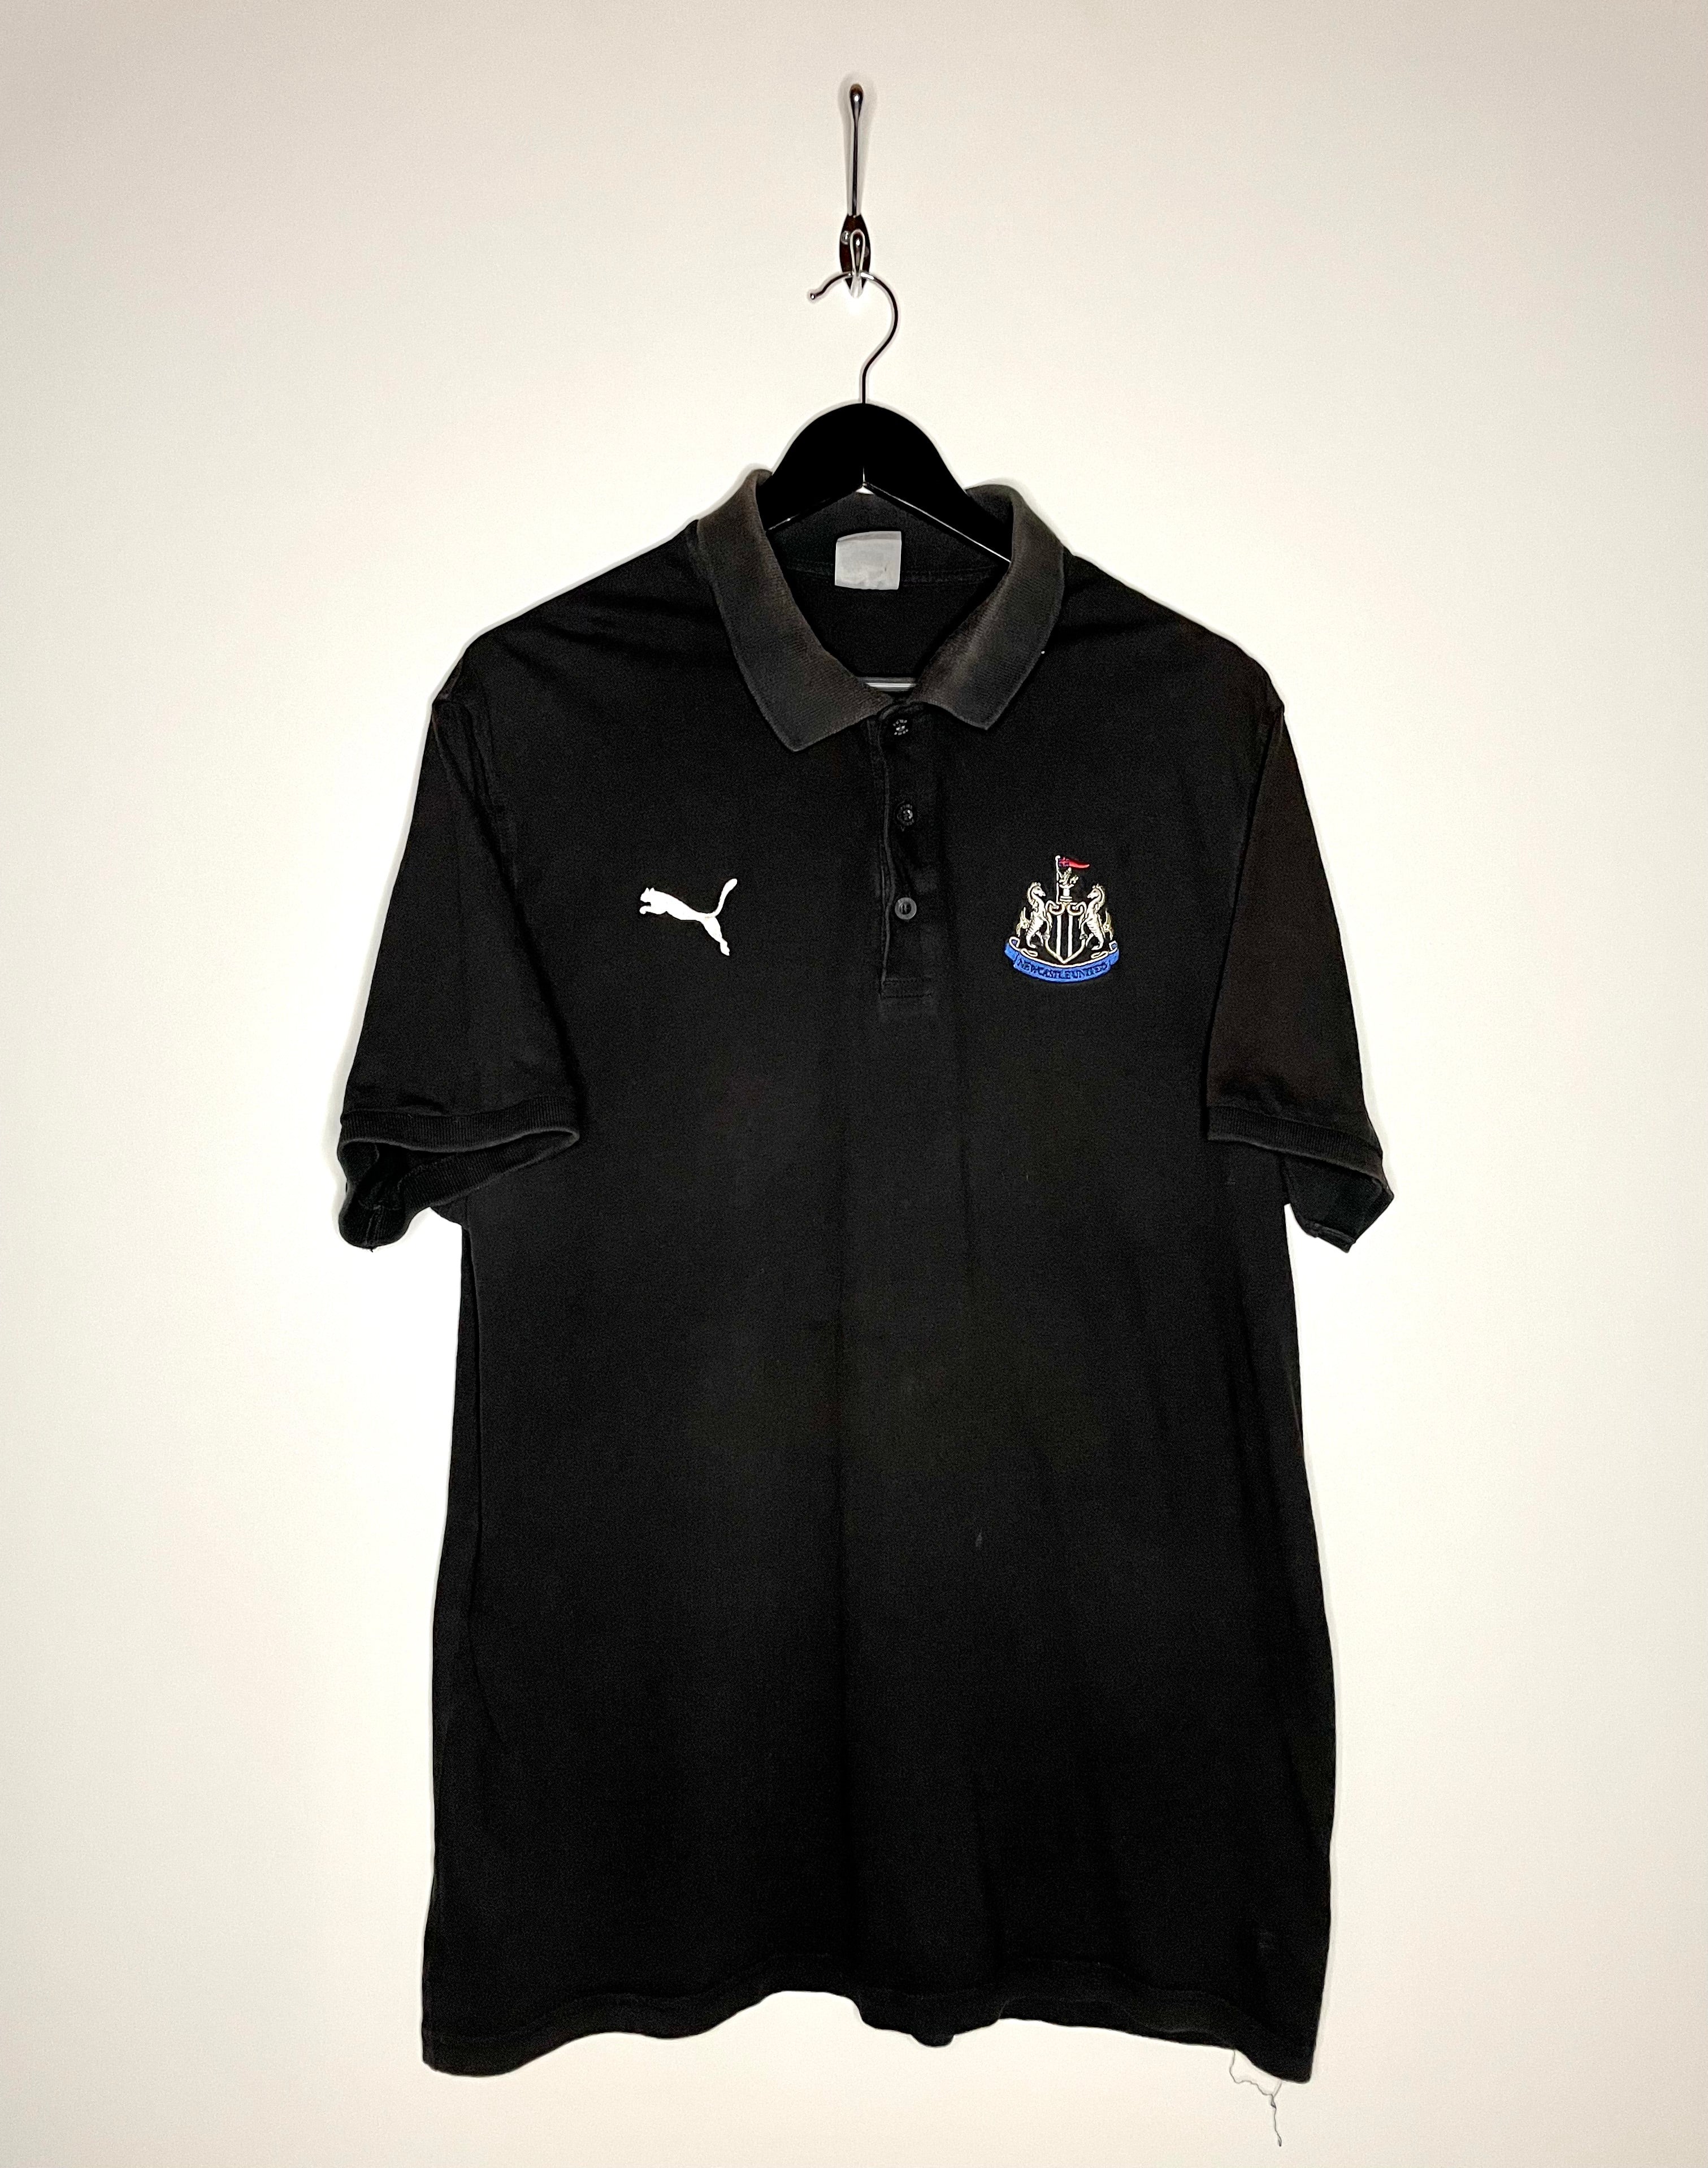 Puma Polo Shirt Newcastle United Black Size 2XL